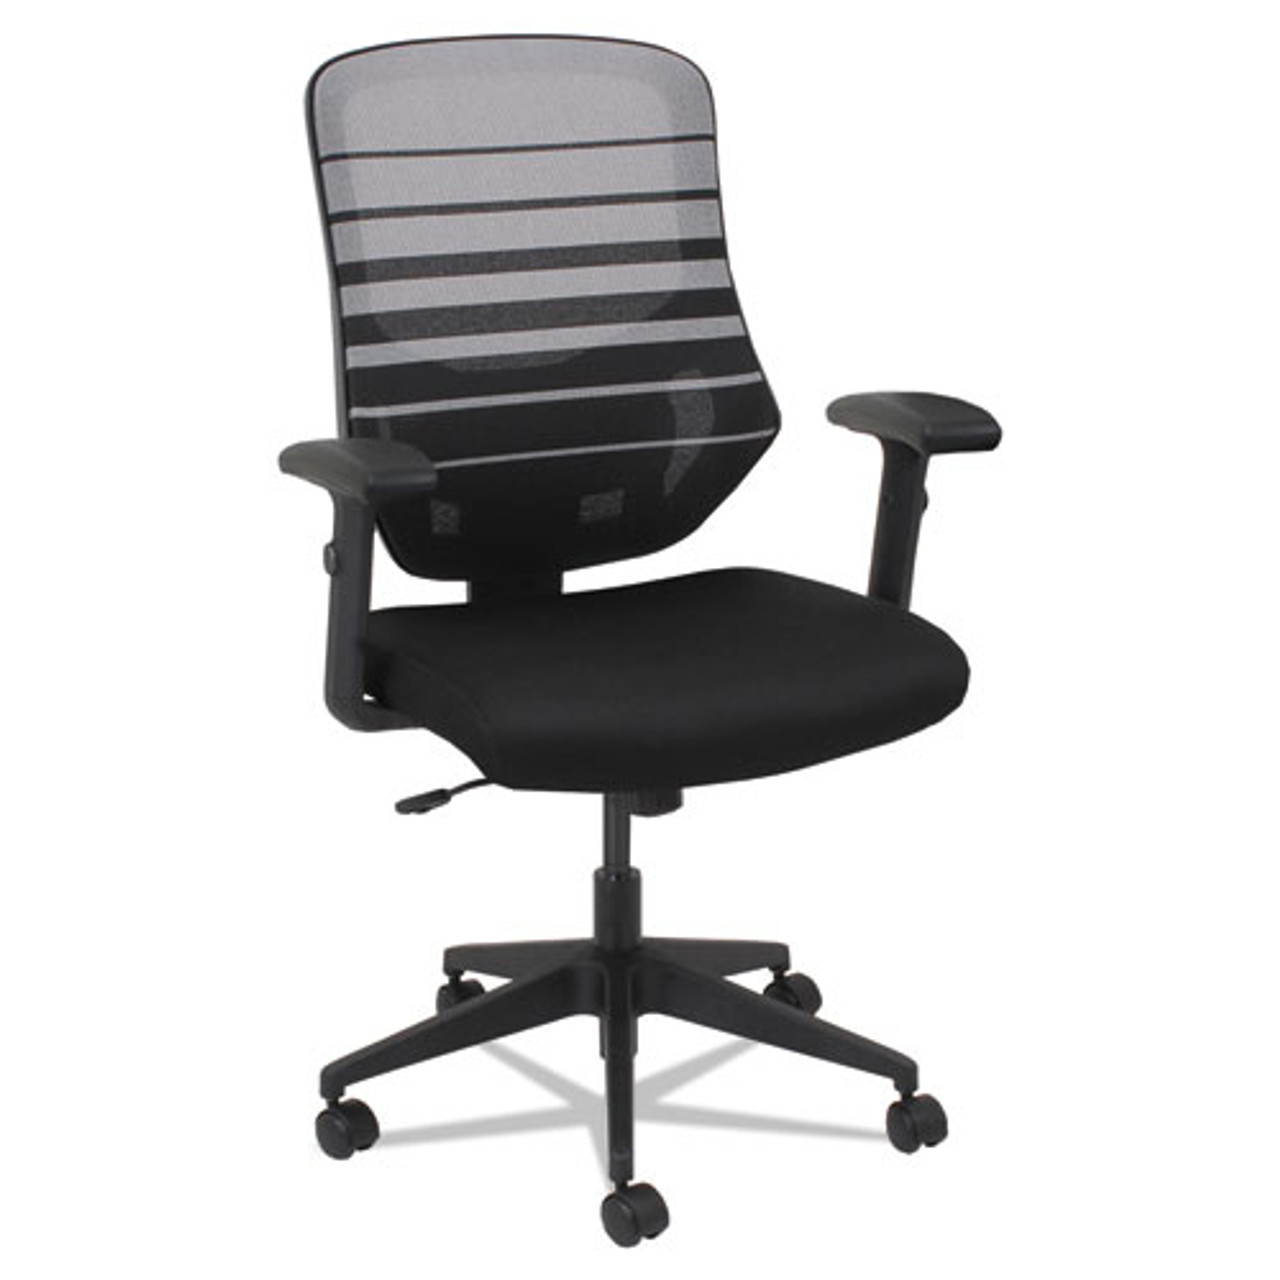 Alera Embre Series Mesh Mid-Back Chair, Black/white, #AL-1098